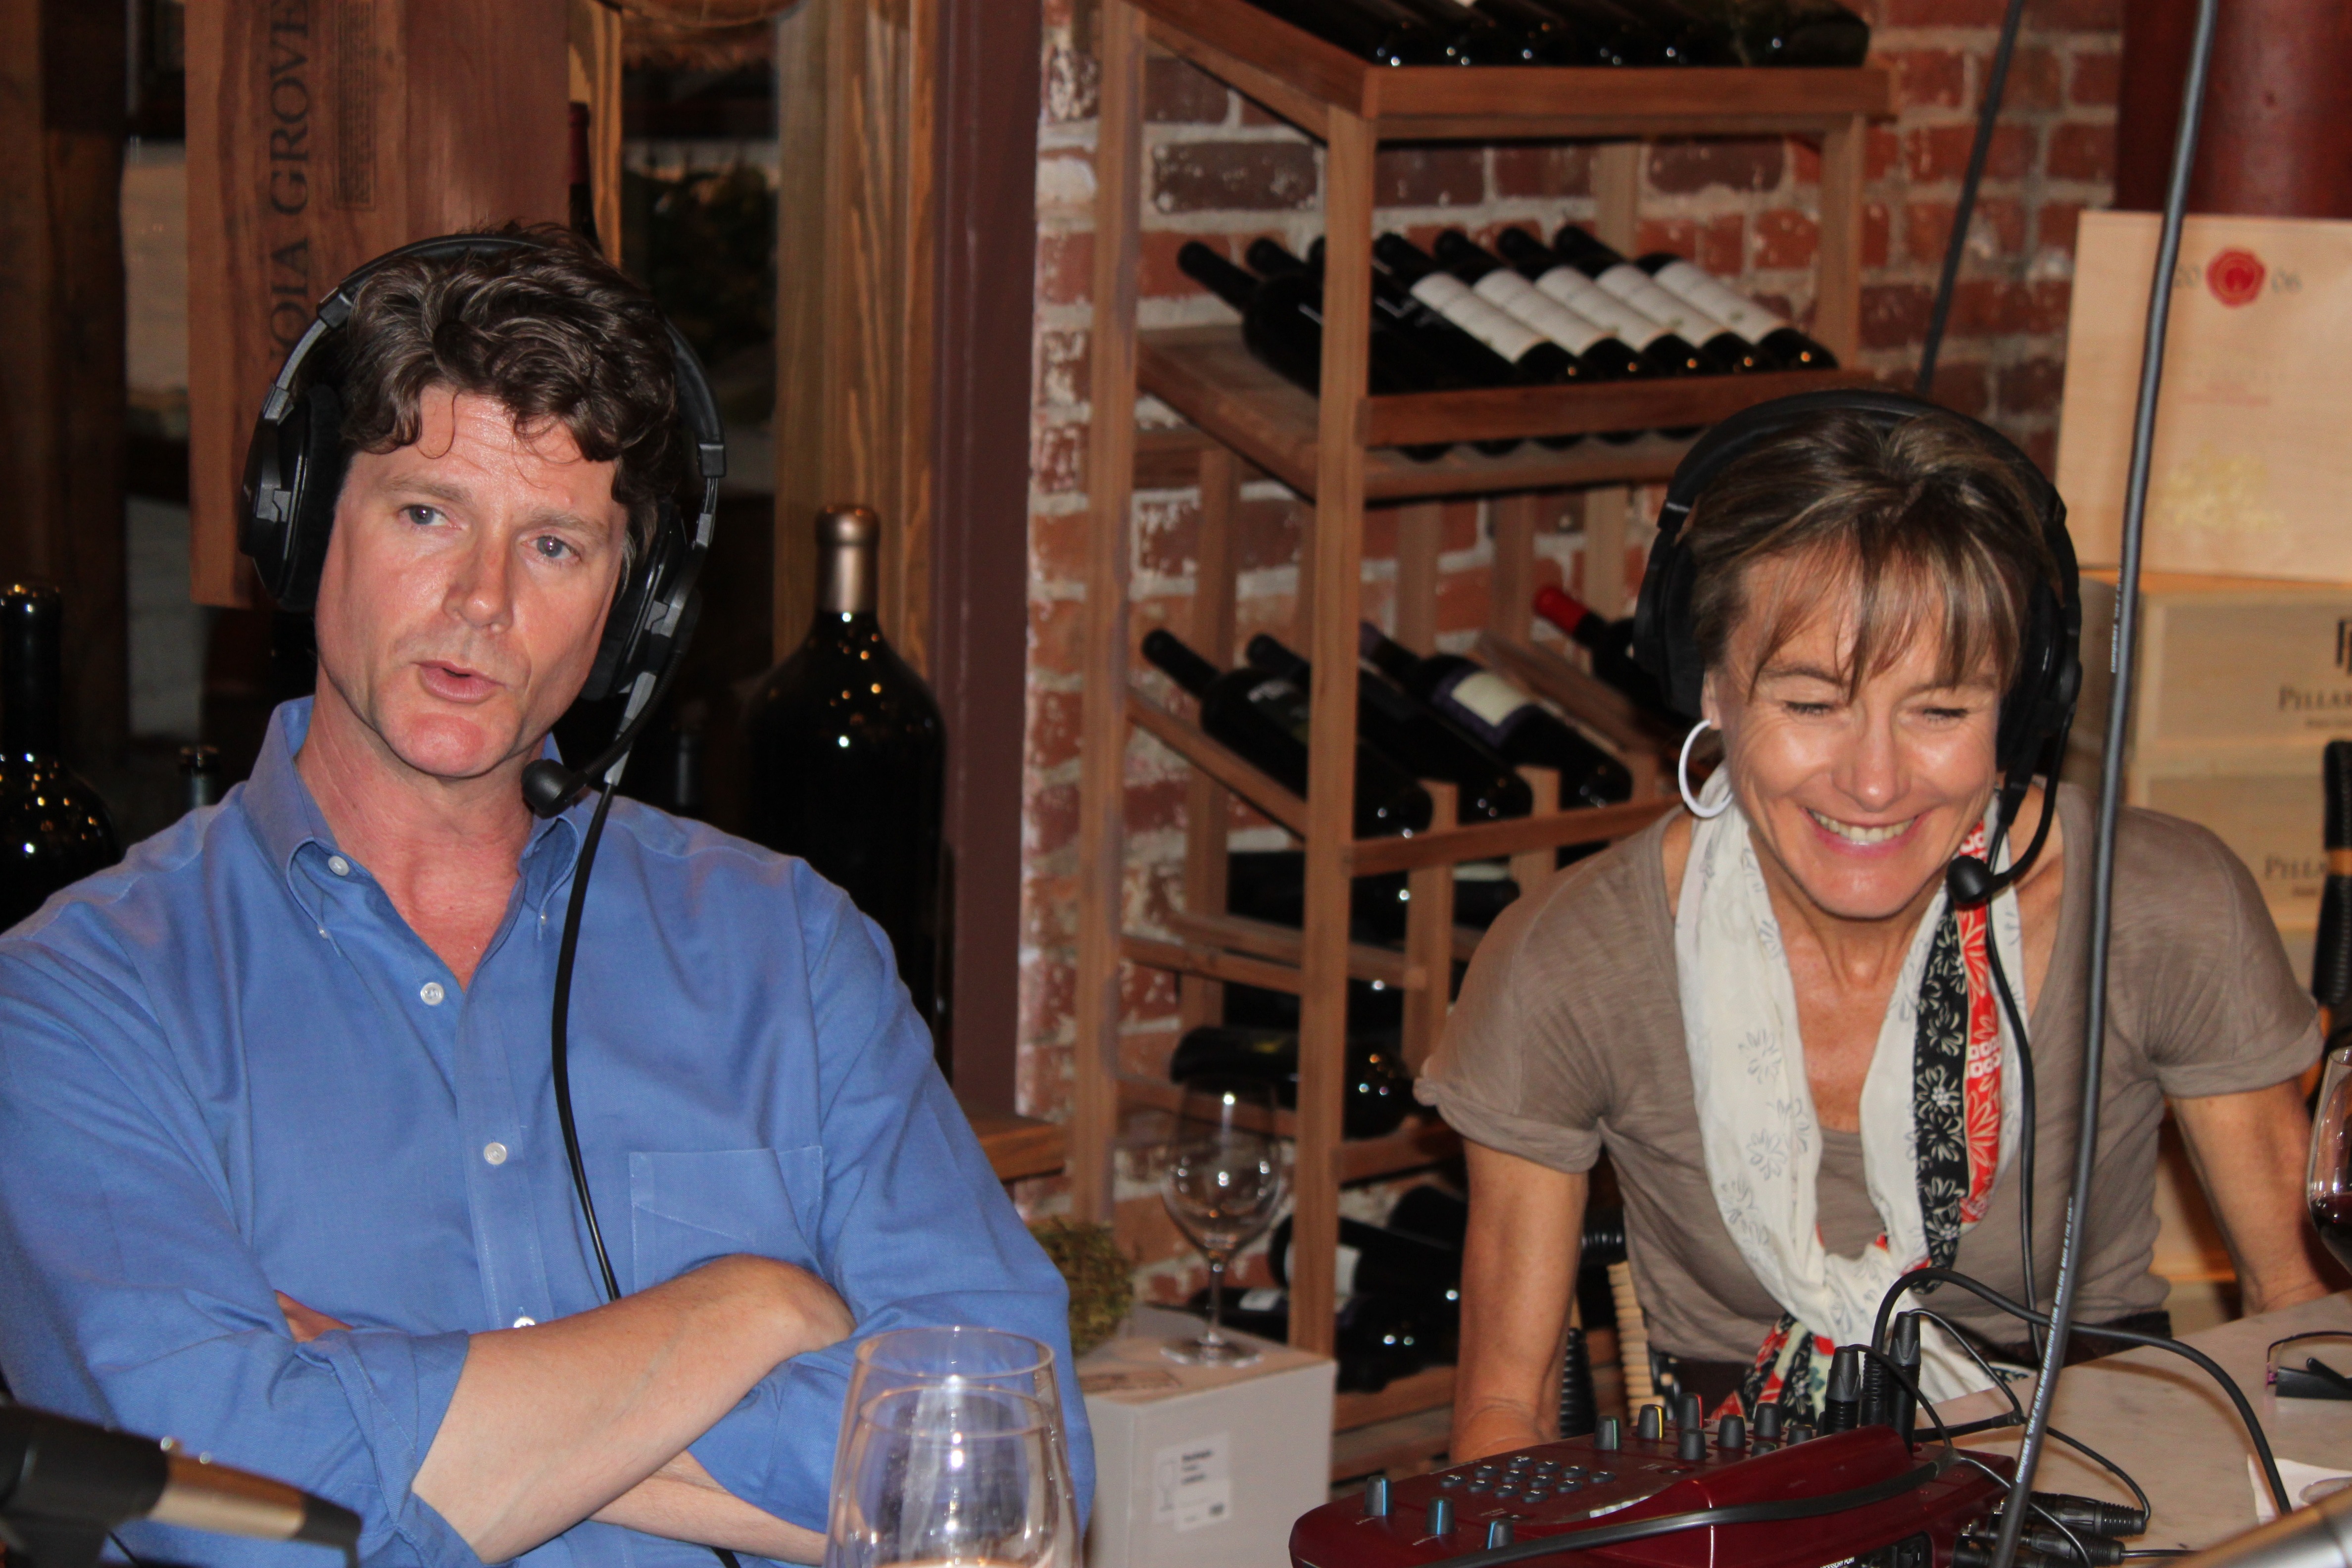 Slow Living Radio Hosts Steve Andrews & Sally James during a remote program broadcast